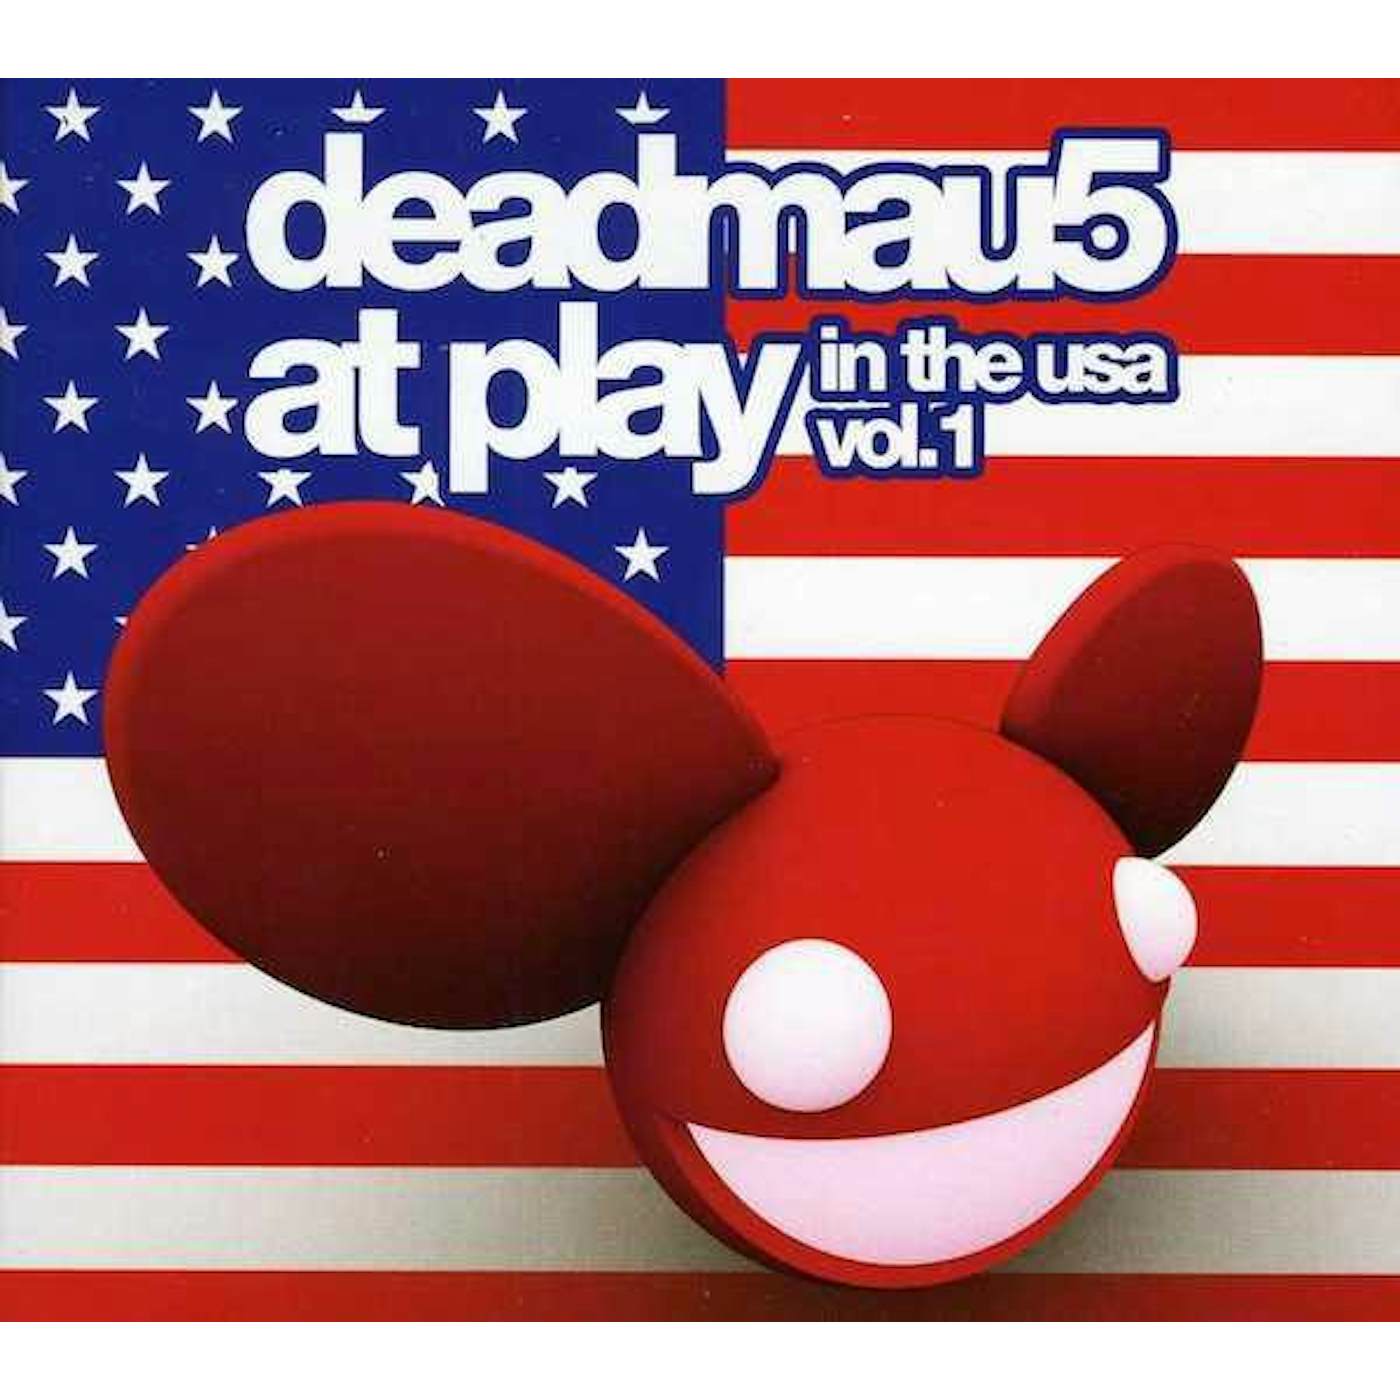 deadmau5 AT PLAY IN THE USA: VOL.1 CD